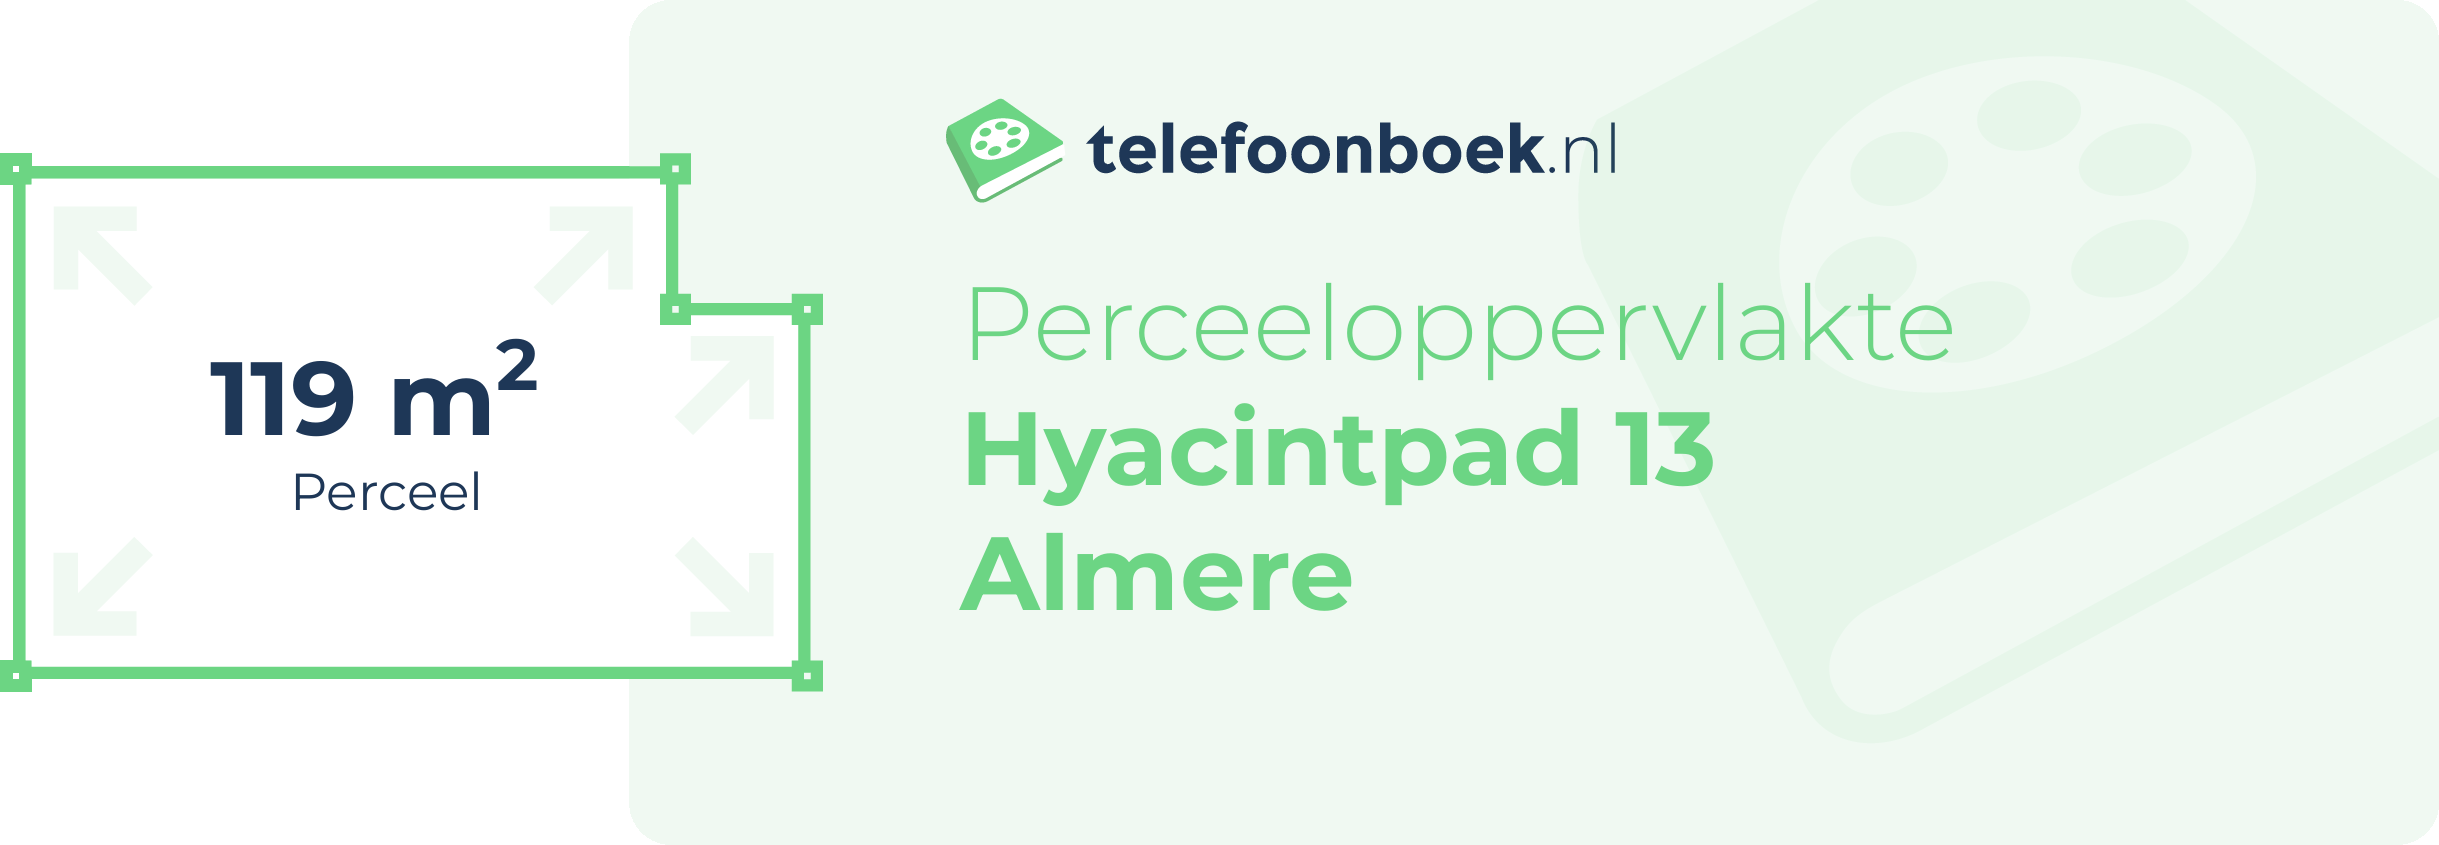 Perceeloppervlakte Hyacintpad 13 Almere